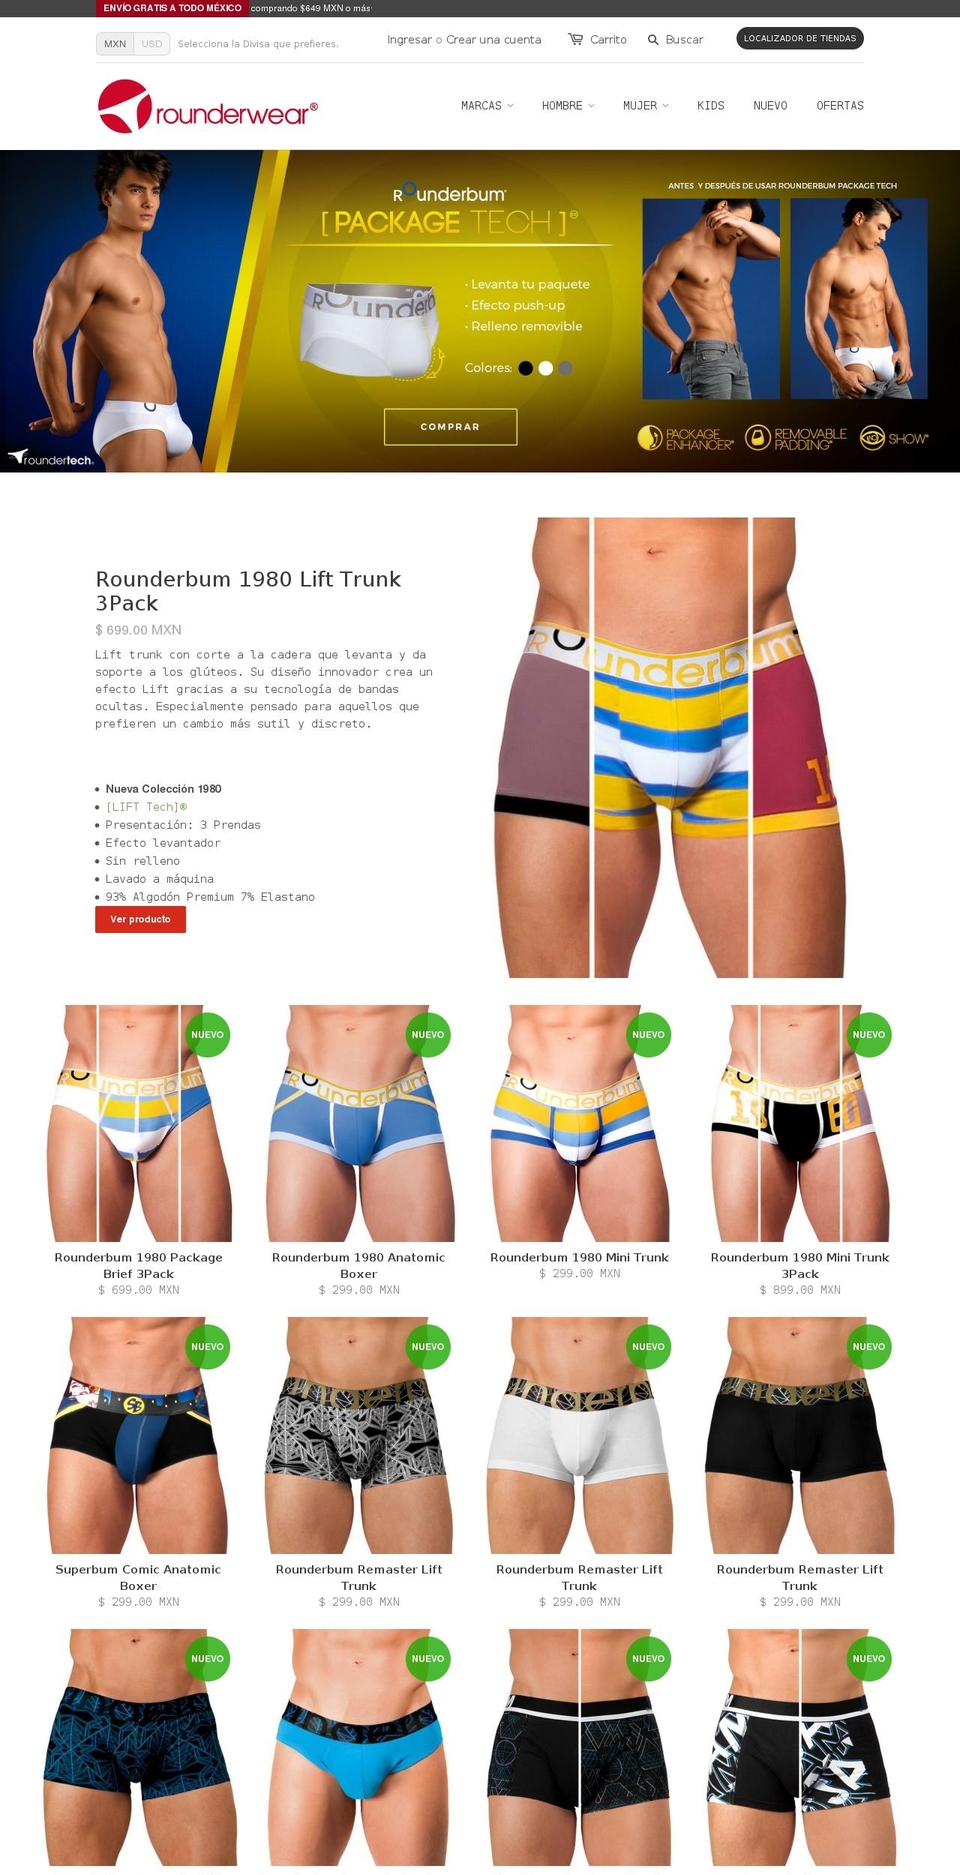 rounderwear.com.mx shopify website screenshot